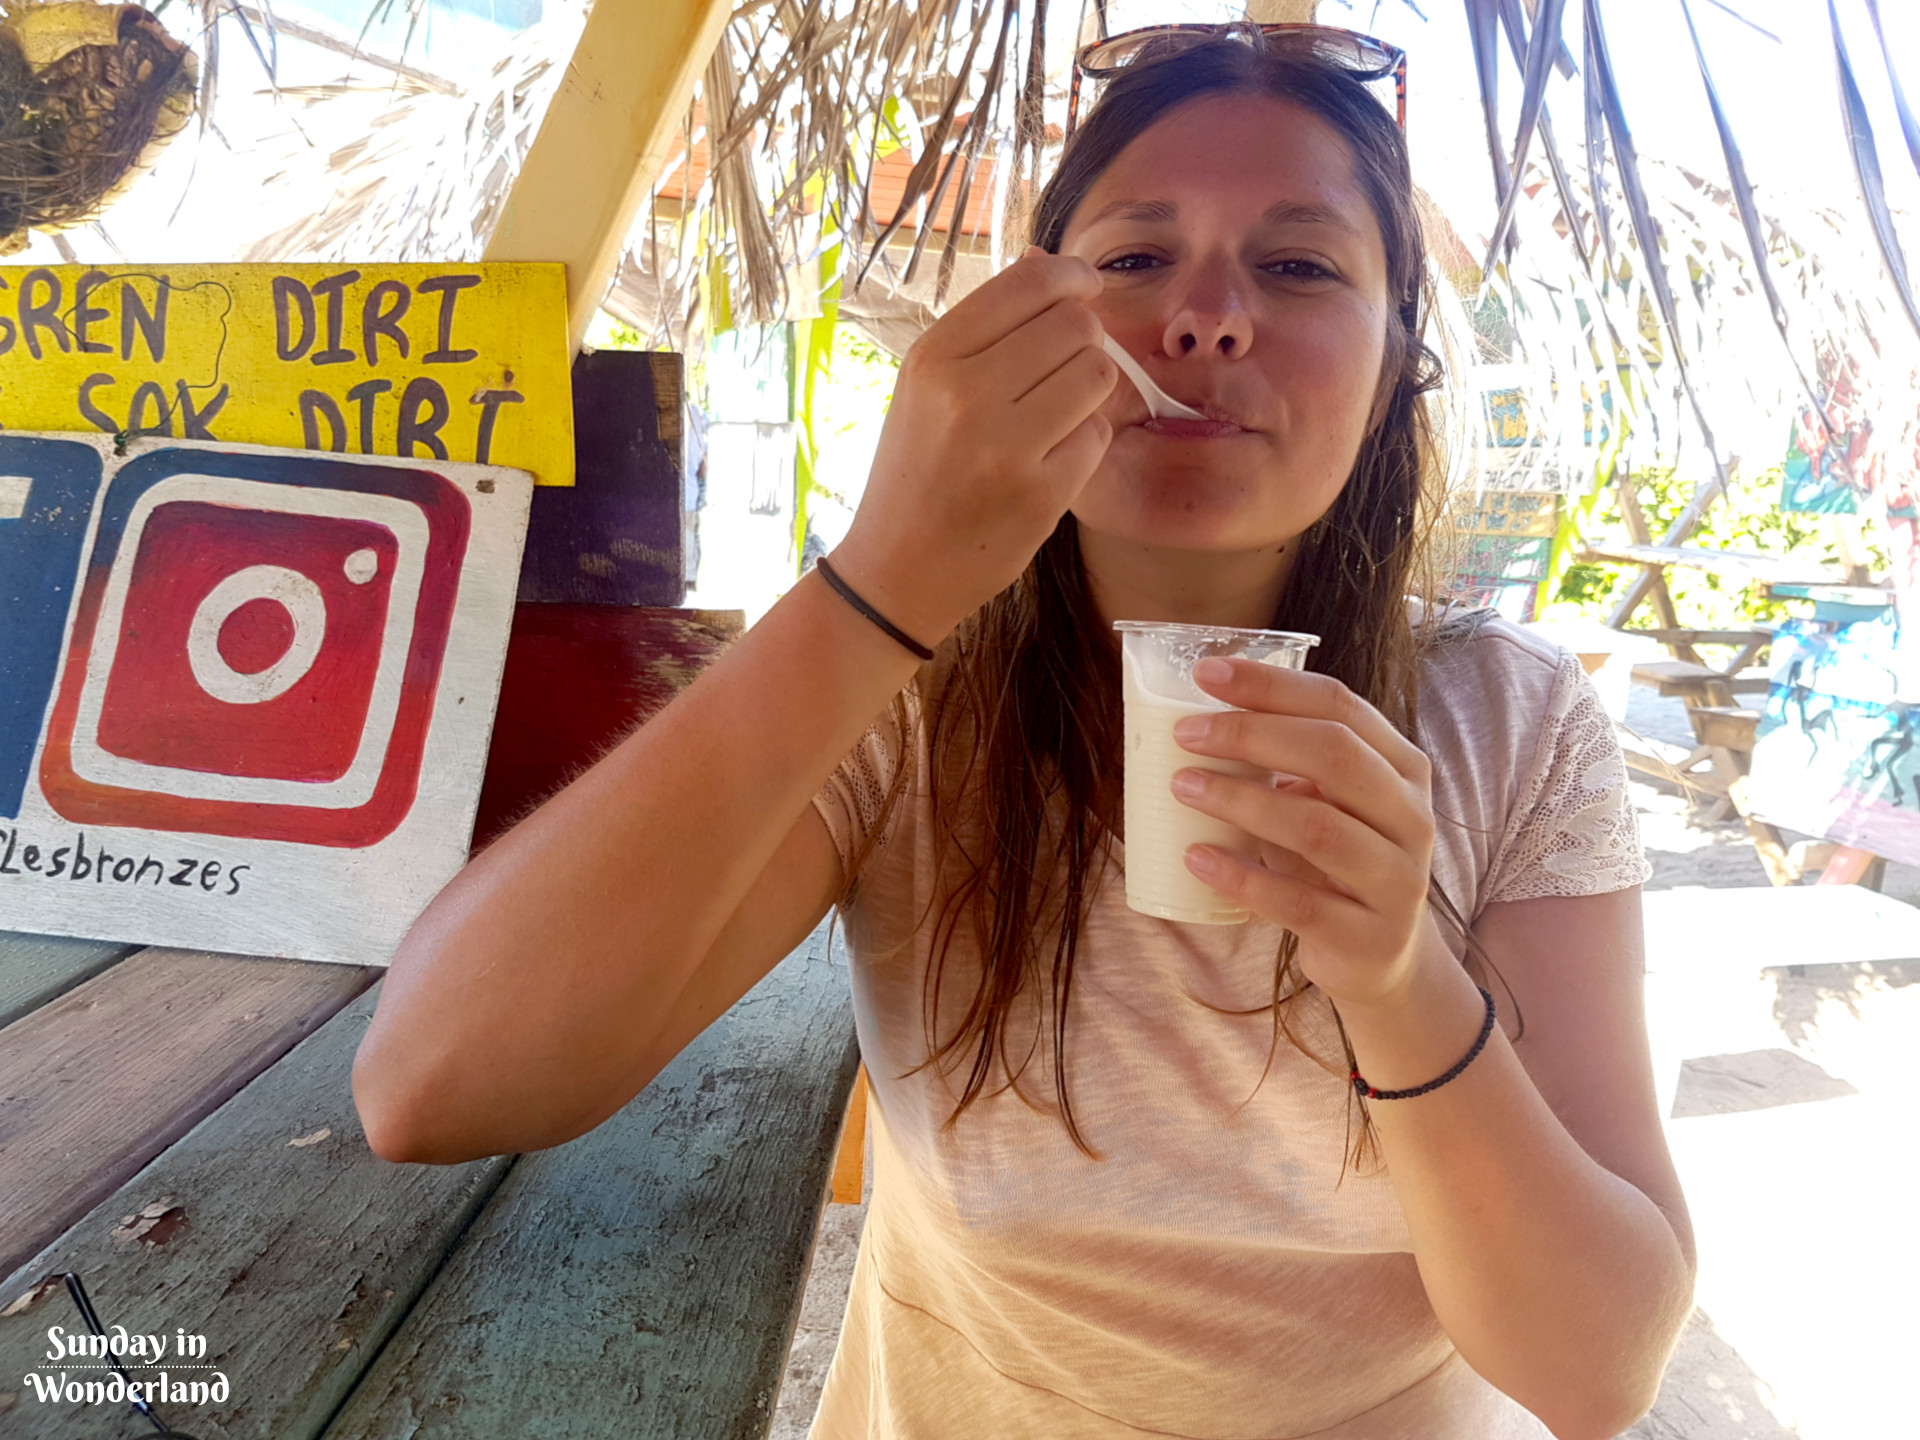 Eating coco sorbet - Guadeloupe - Caribbean - Sunday in Wonderland Blog